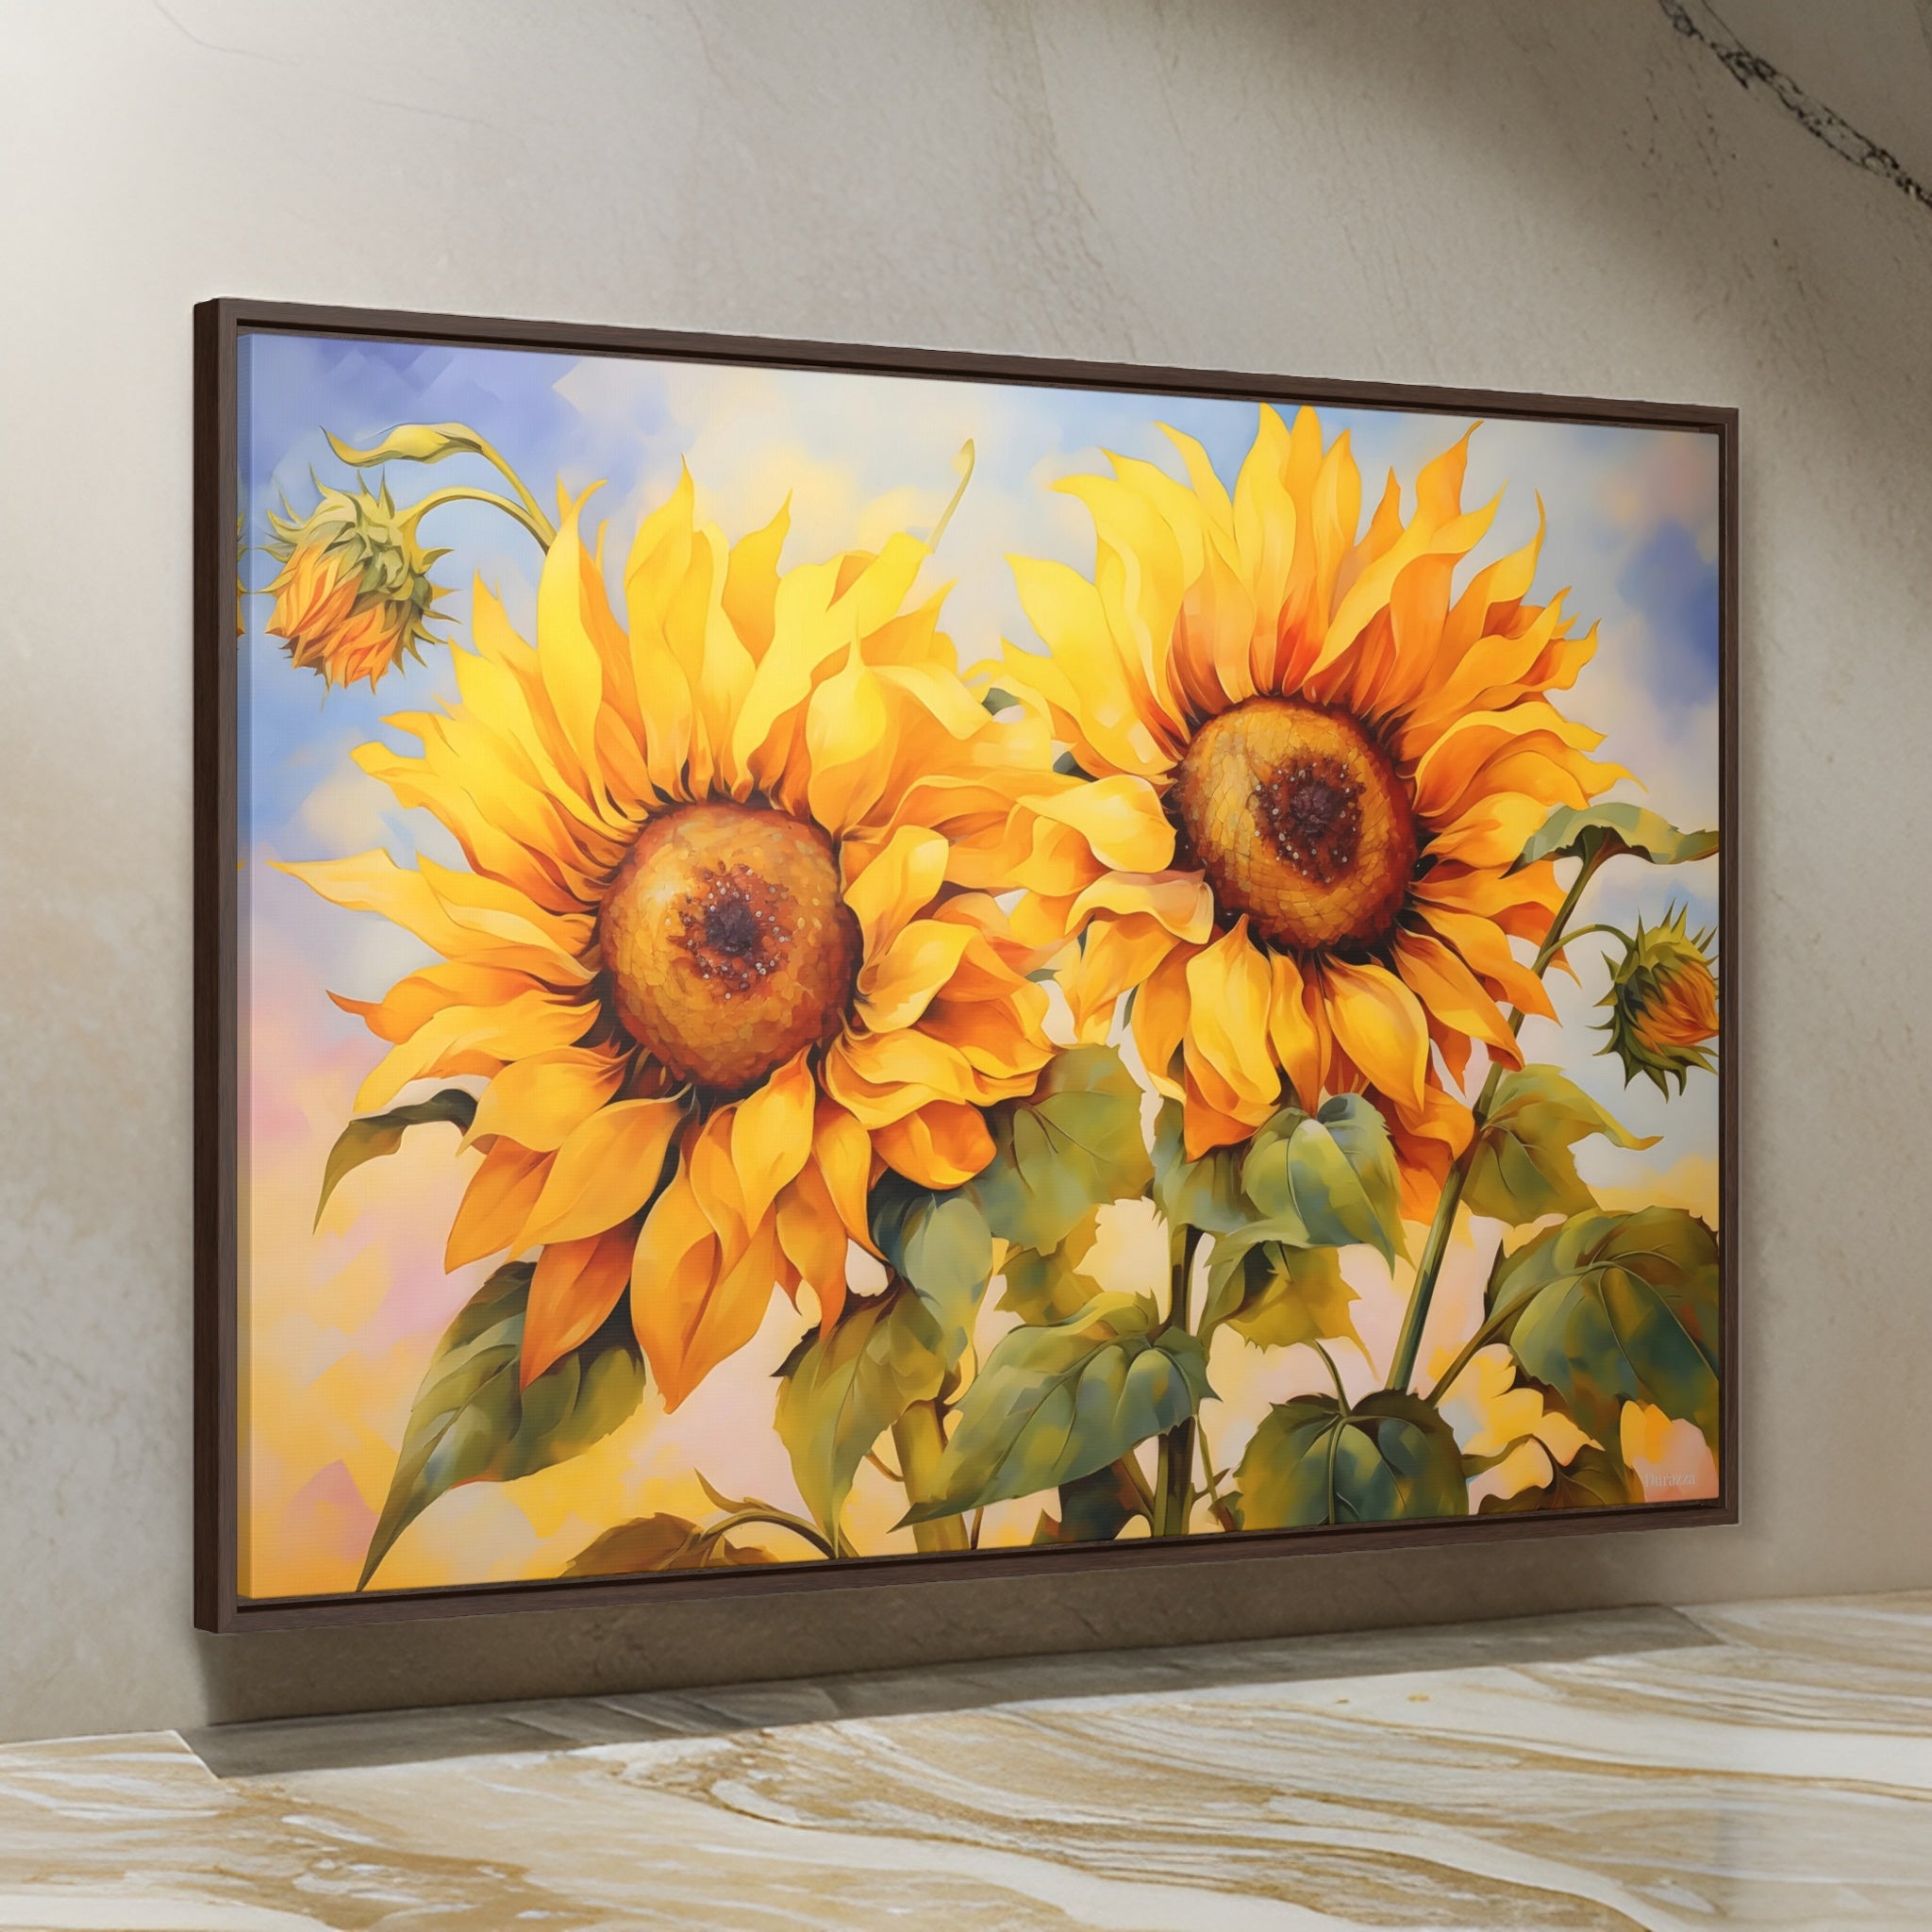 Sunflower Splendor Wall Art: Impressionist Painting